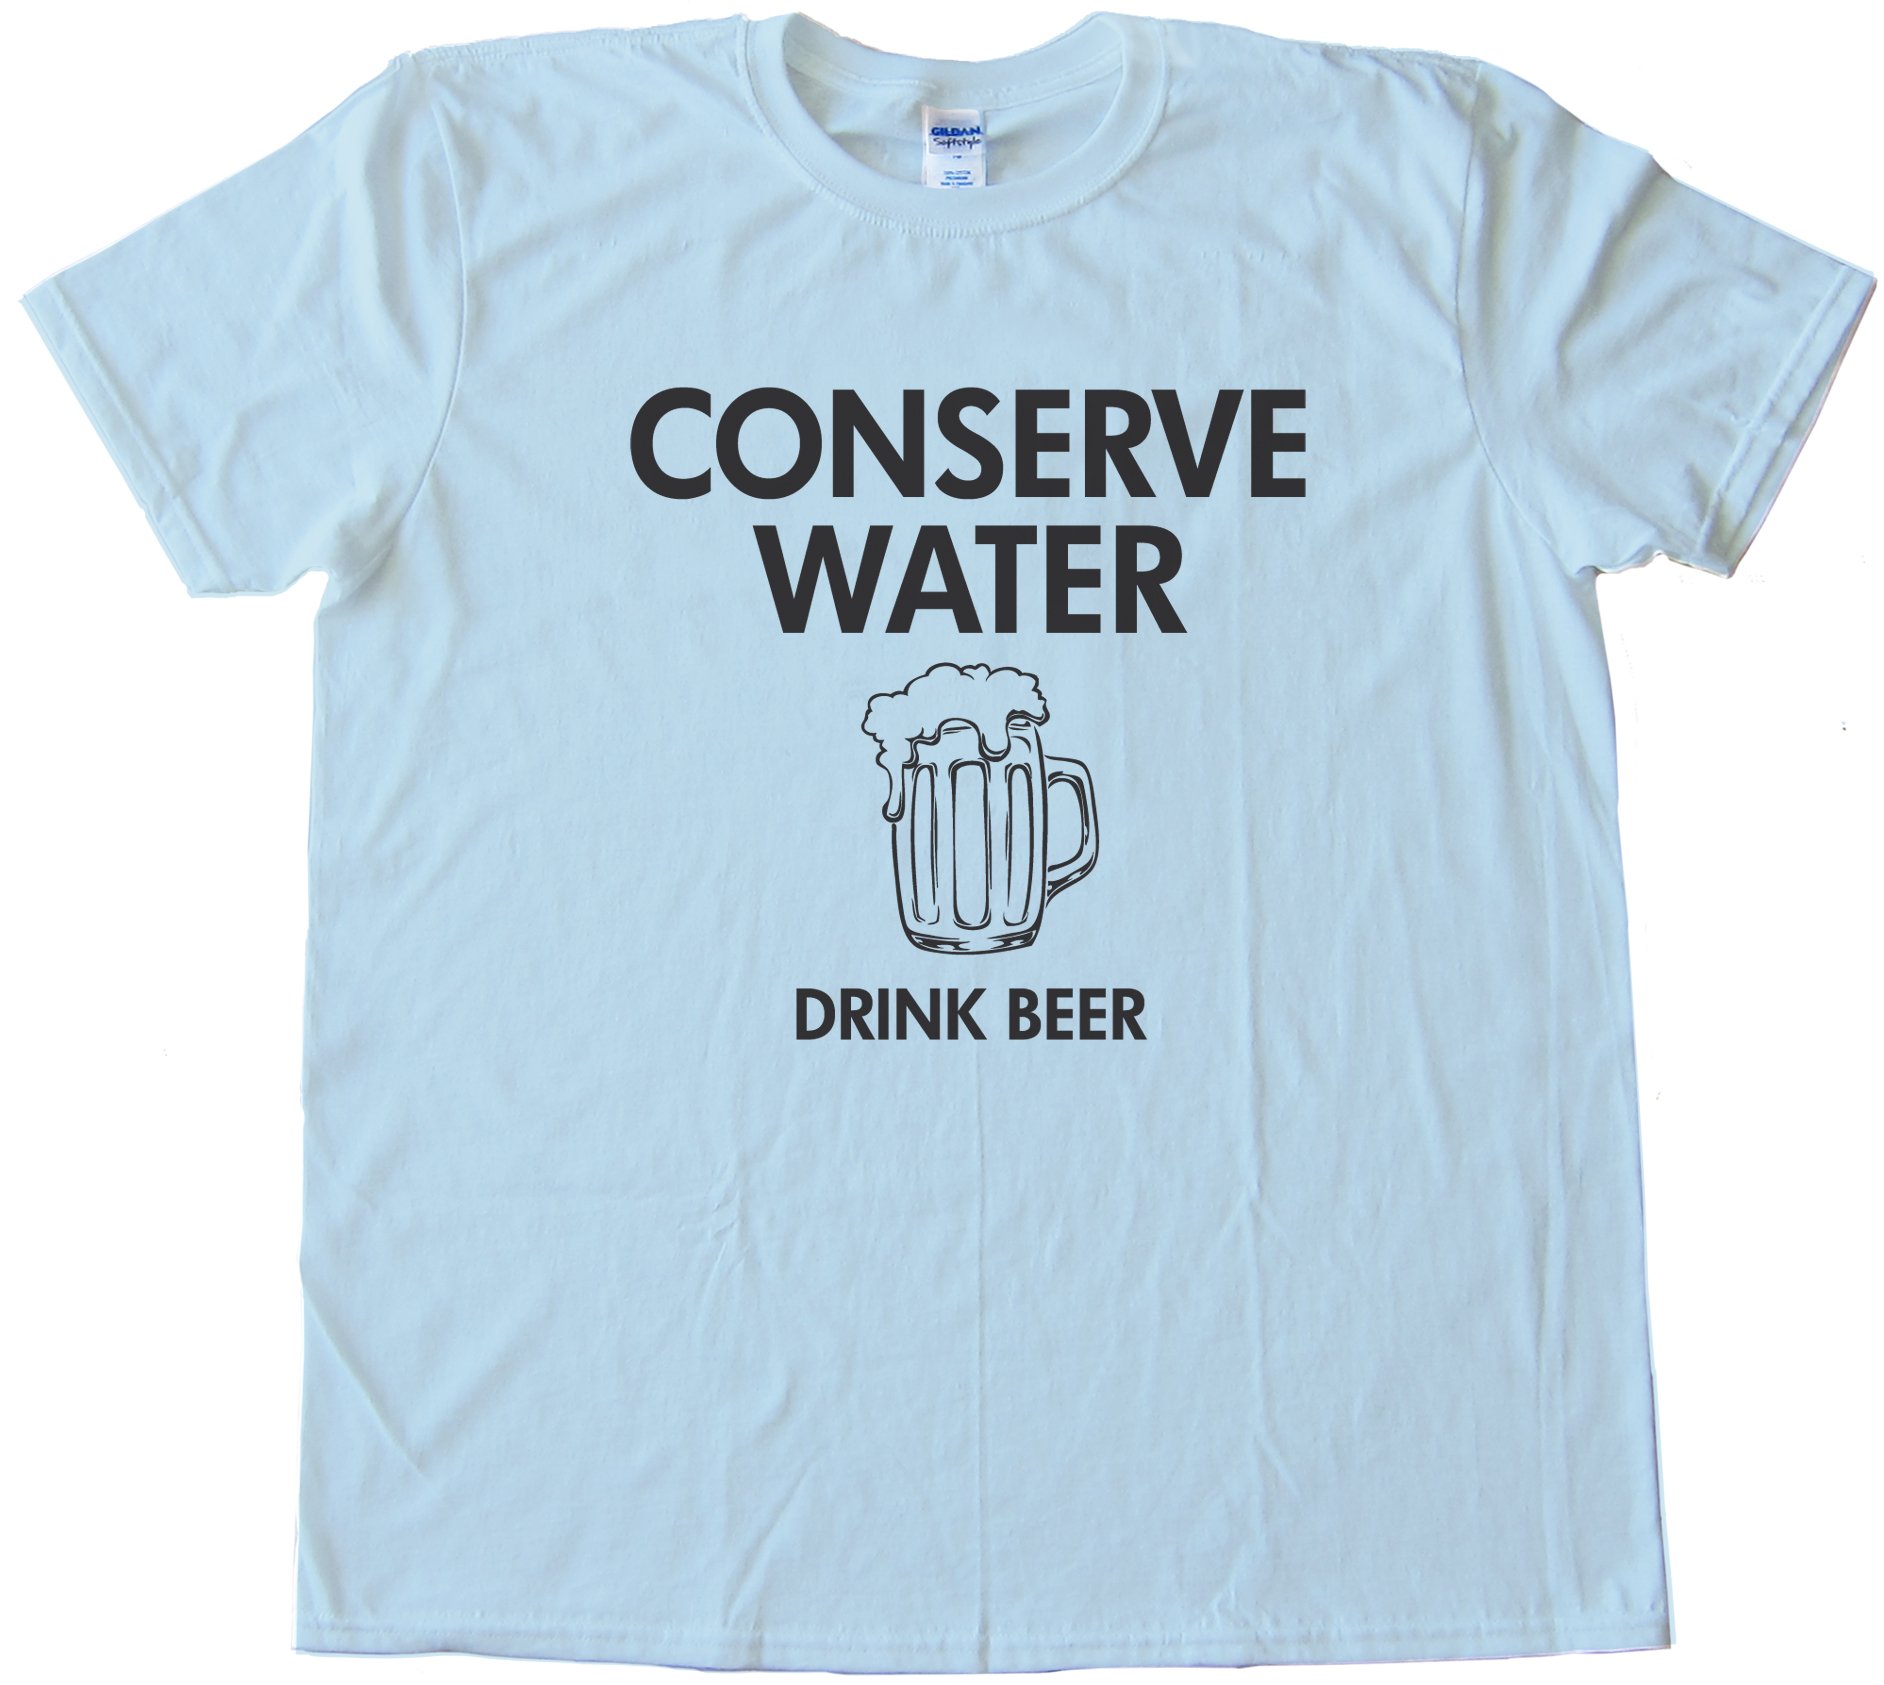 Conserve Water Drink Beer - Tee Shirt